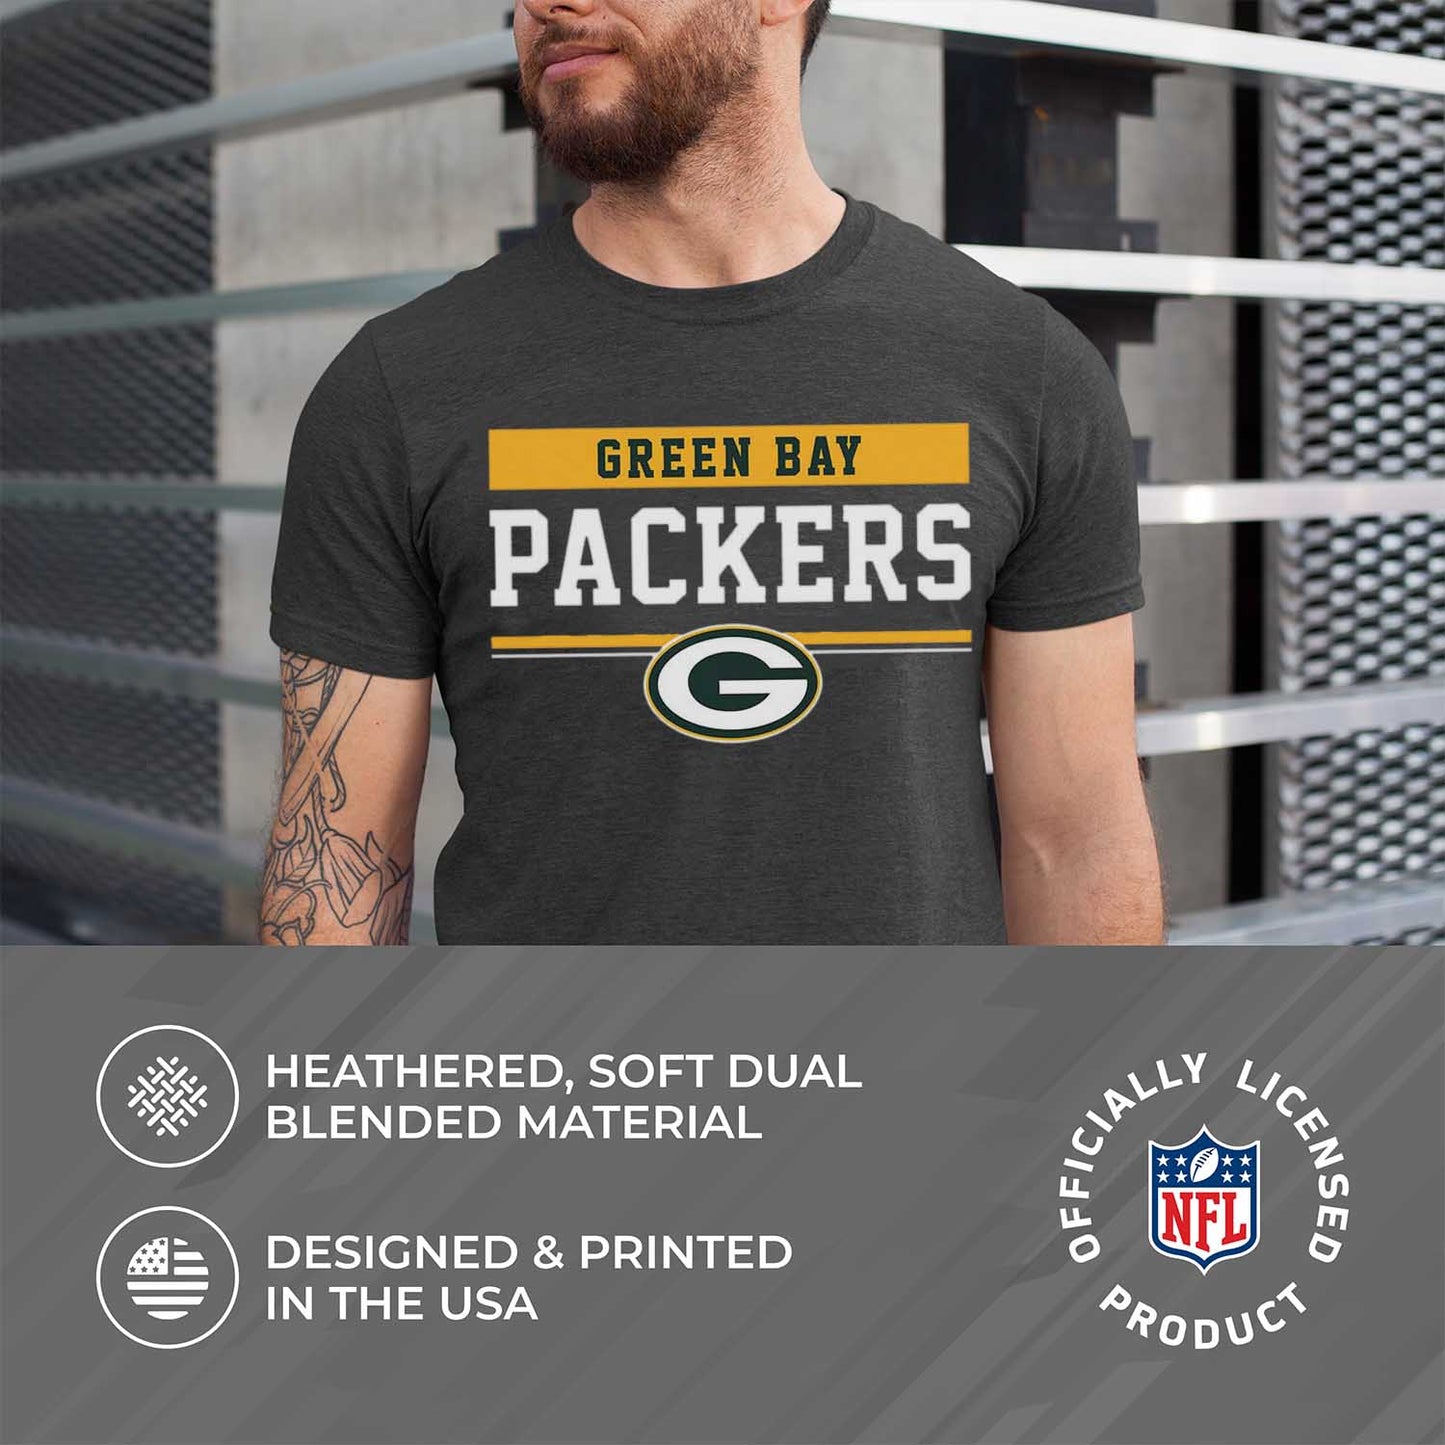 Green Bay Packers NFL Adult Team Block Tagless T-Shirt - Charcoal